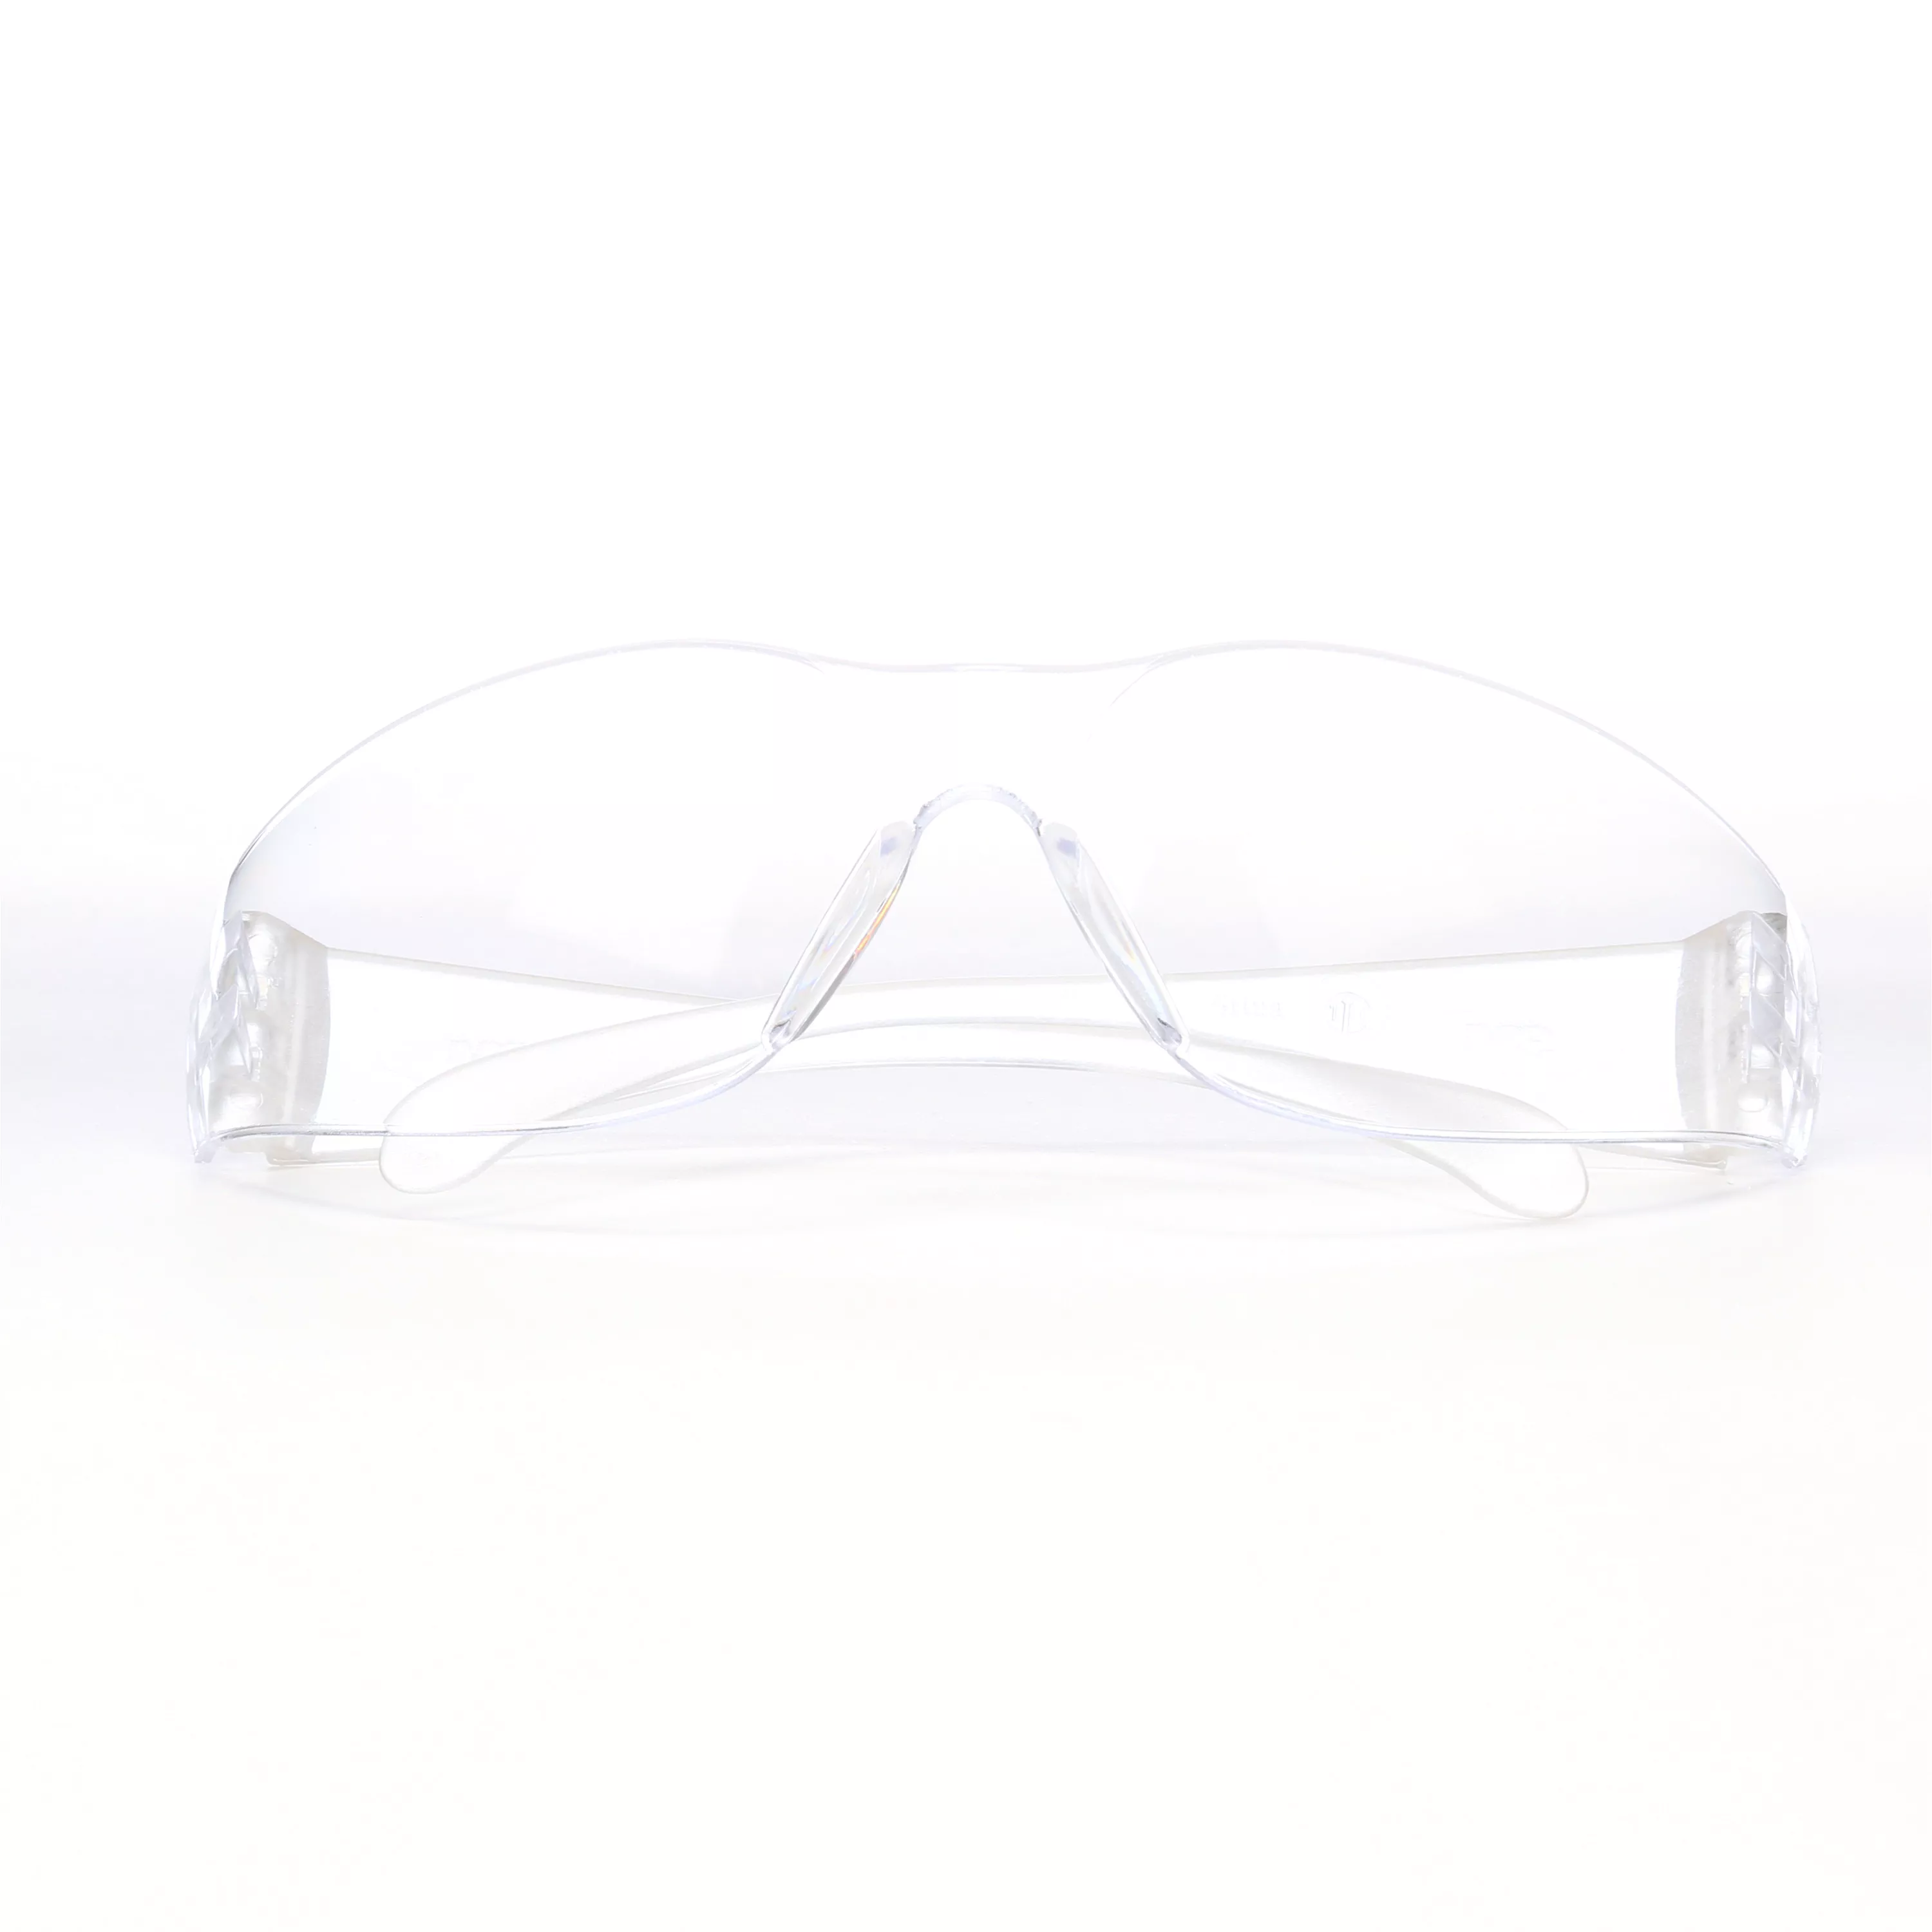 3M™ Virtua™ Protective Eyewear 11326-00000-20 Clear Temples Clear Hard
Coat Lens, 20 EA/Case